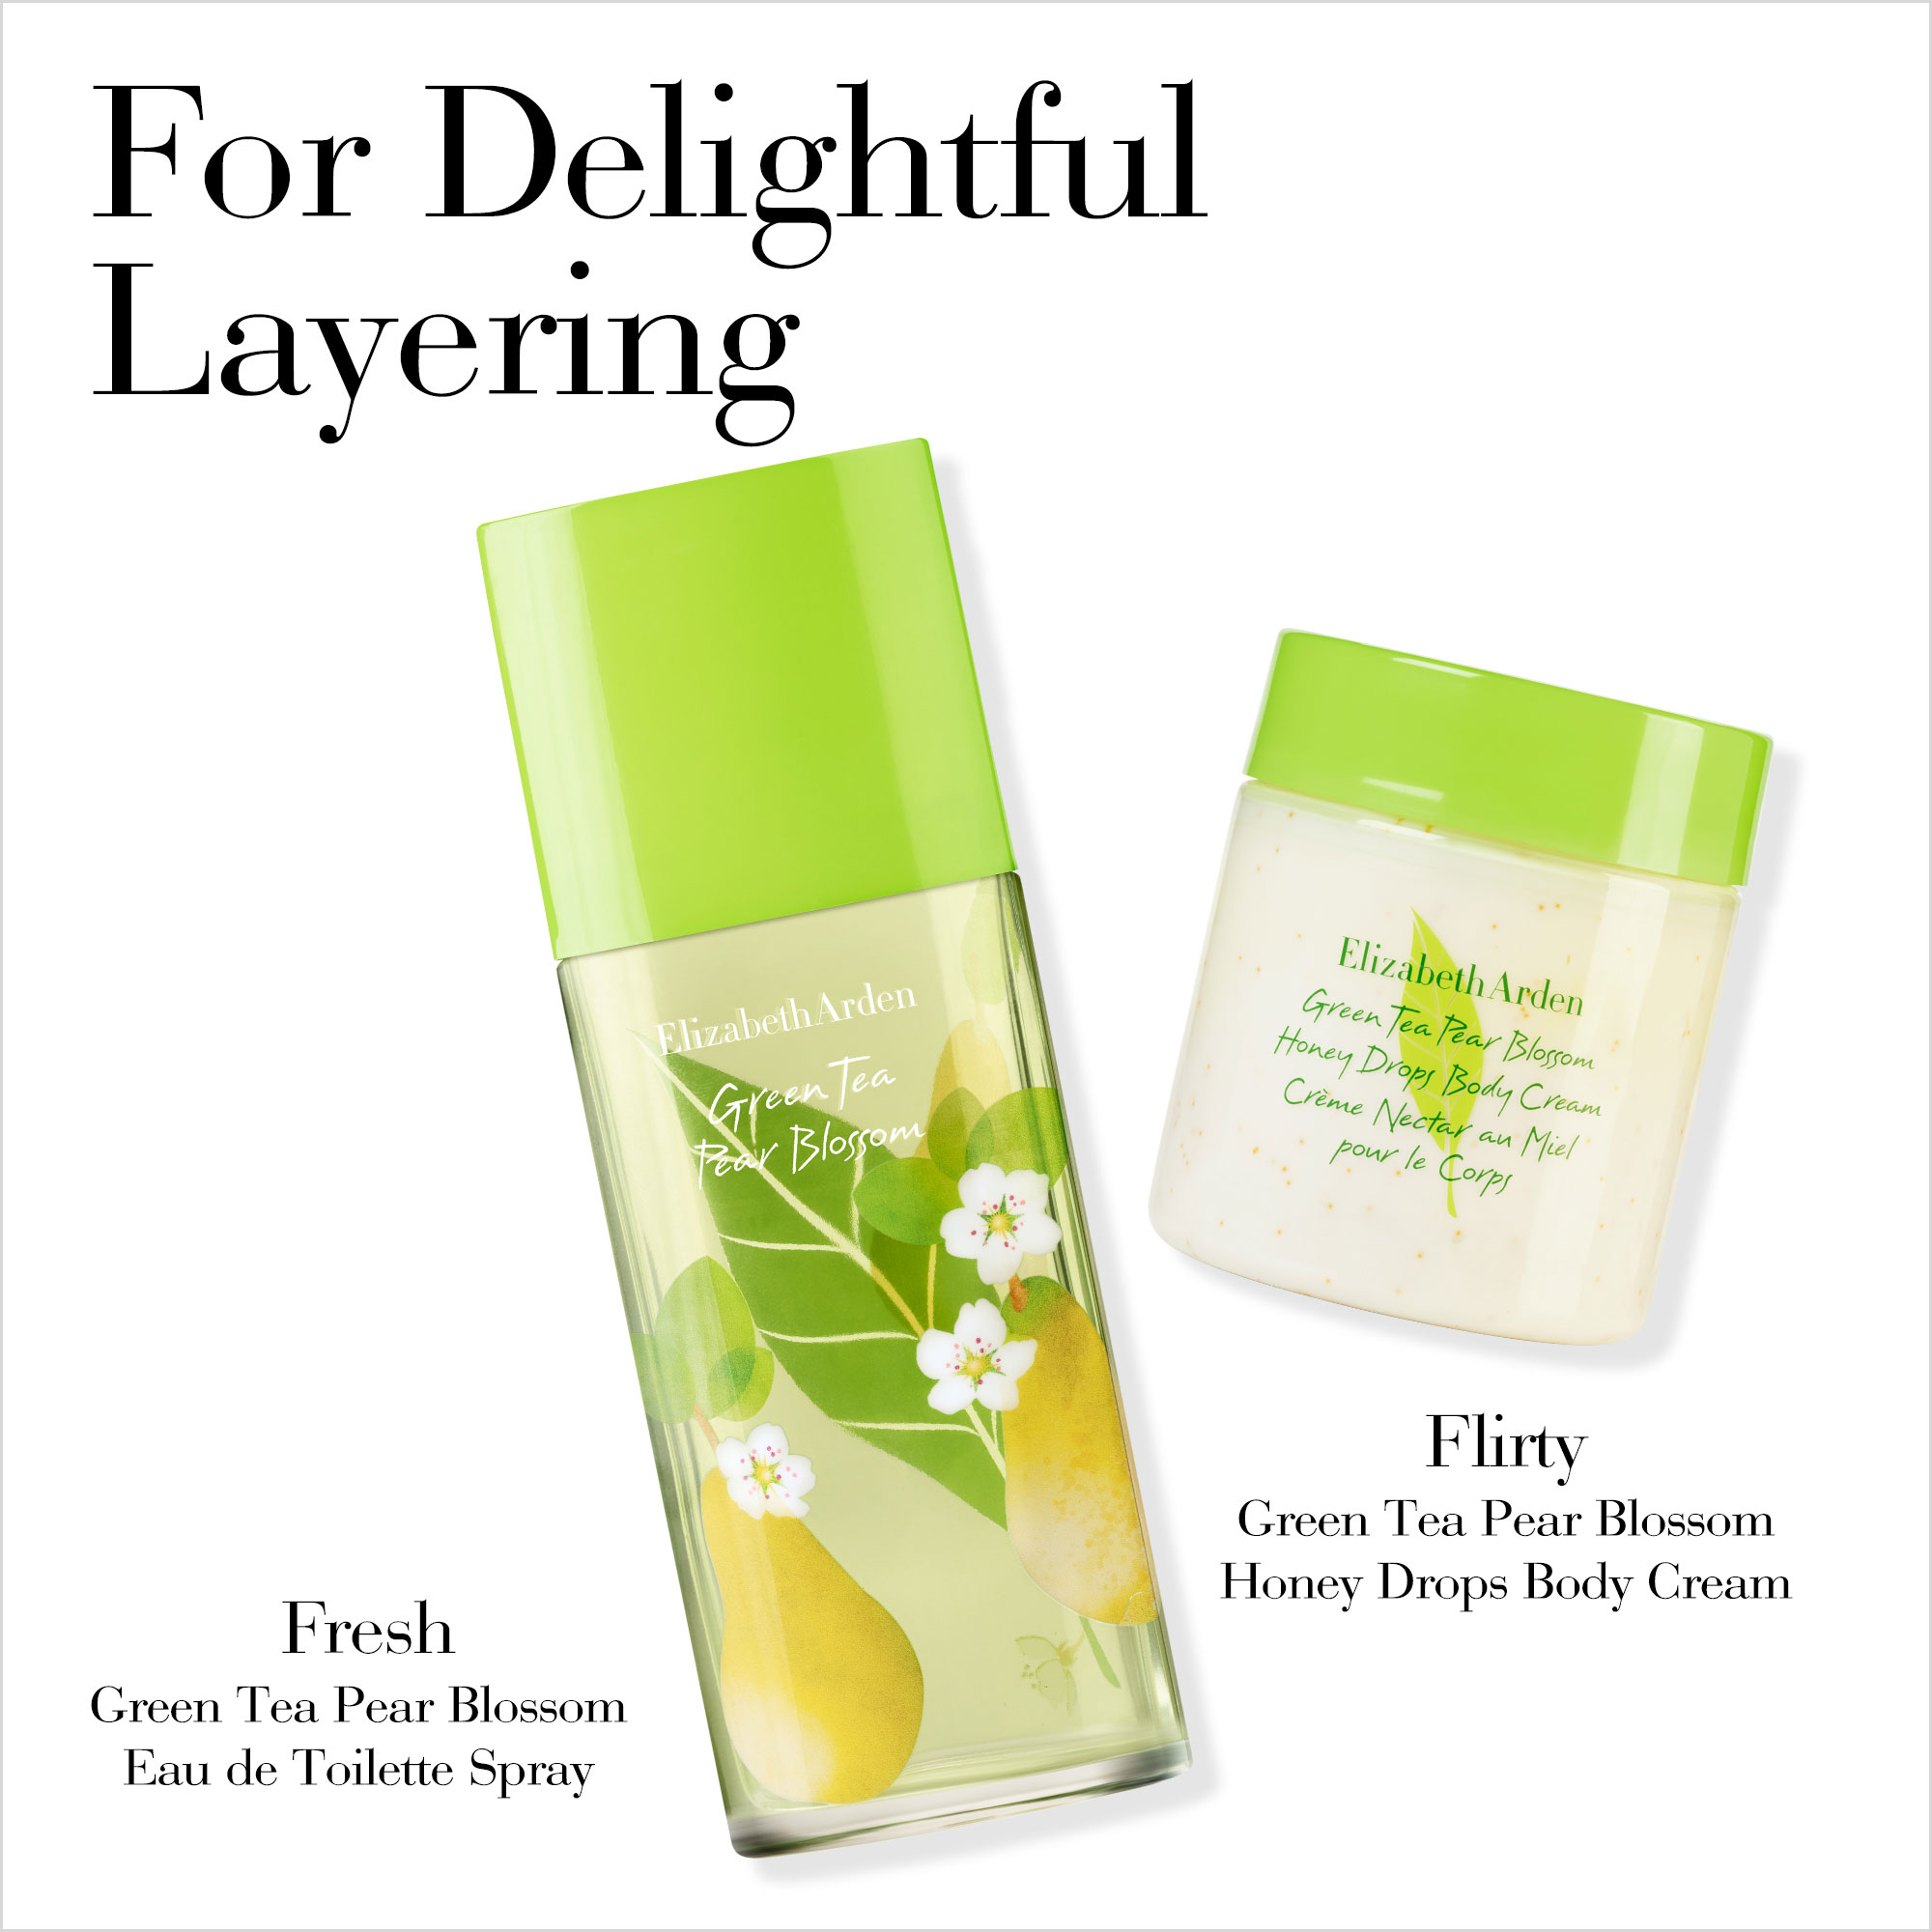 For Delightful Layering, Fresh Green Tea Pear Blossom Eau De Toilette Spray Plus Flirty Green Tea Pear Blossom Honey Drops Body Cream